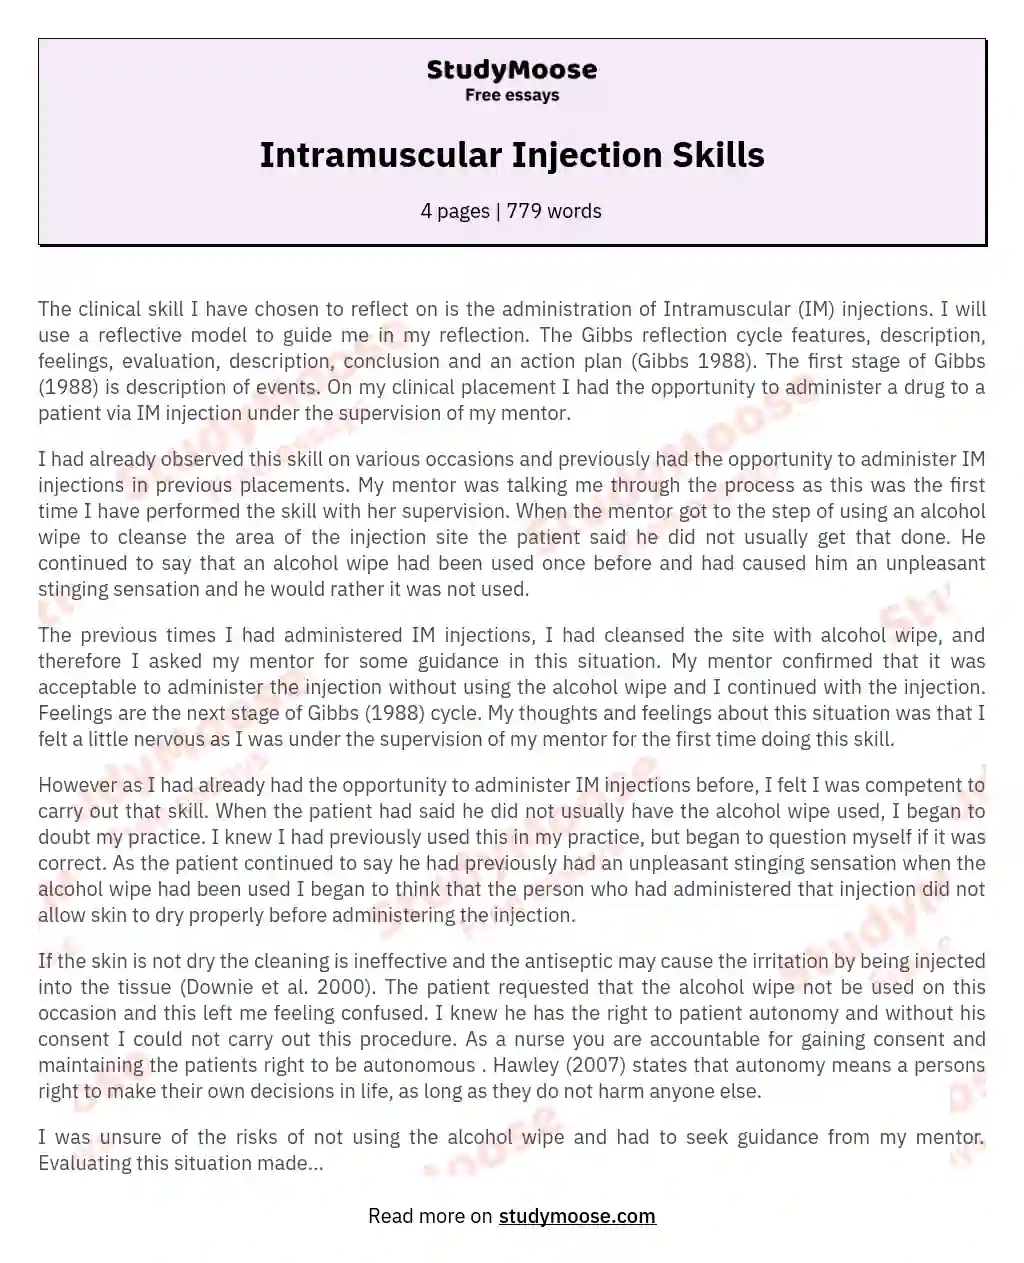 Intramuscular Injection Skills essay